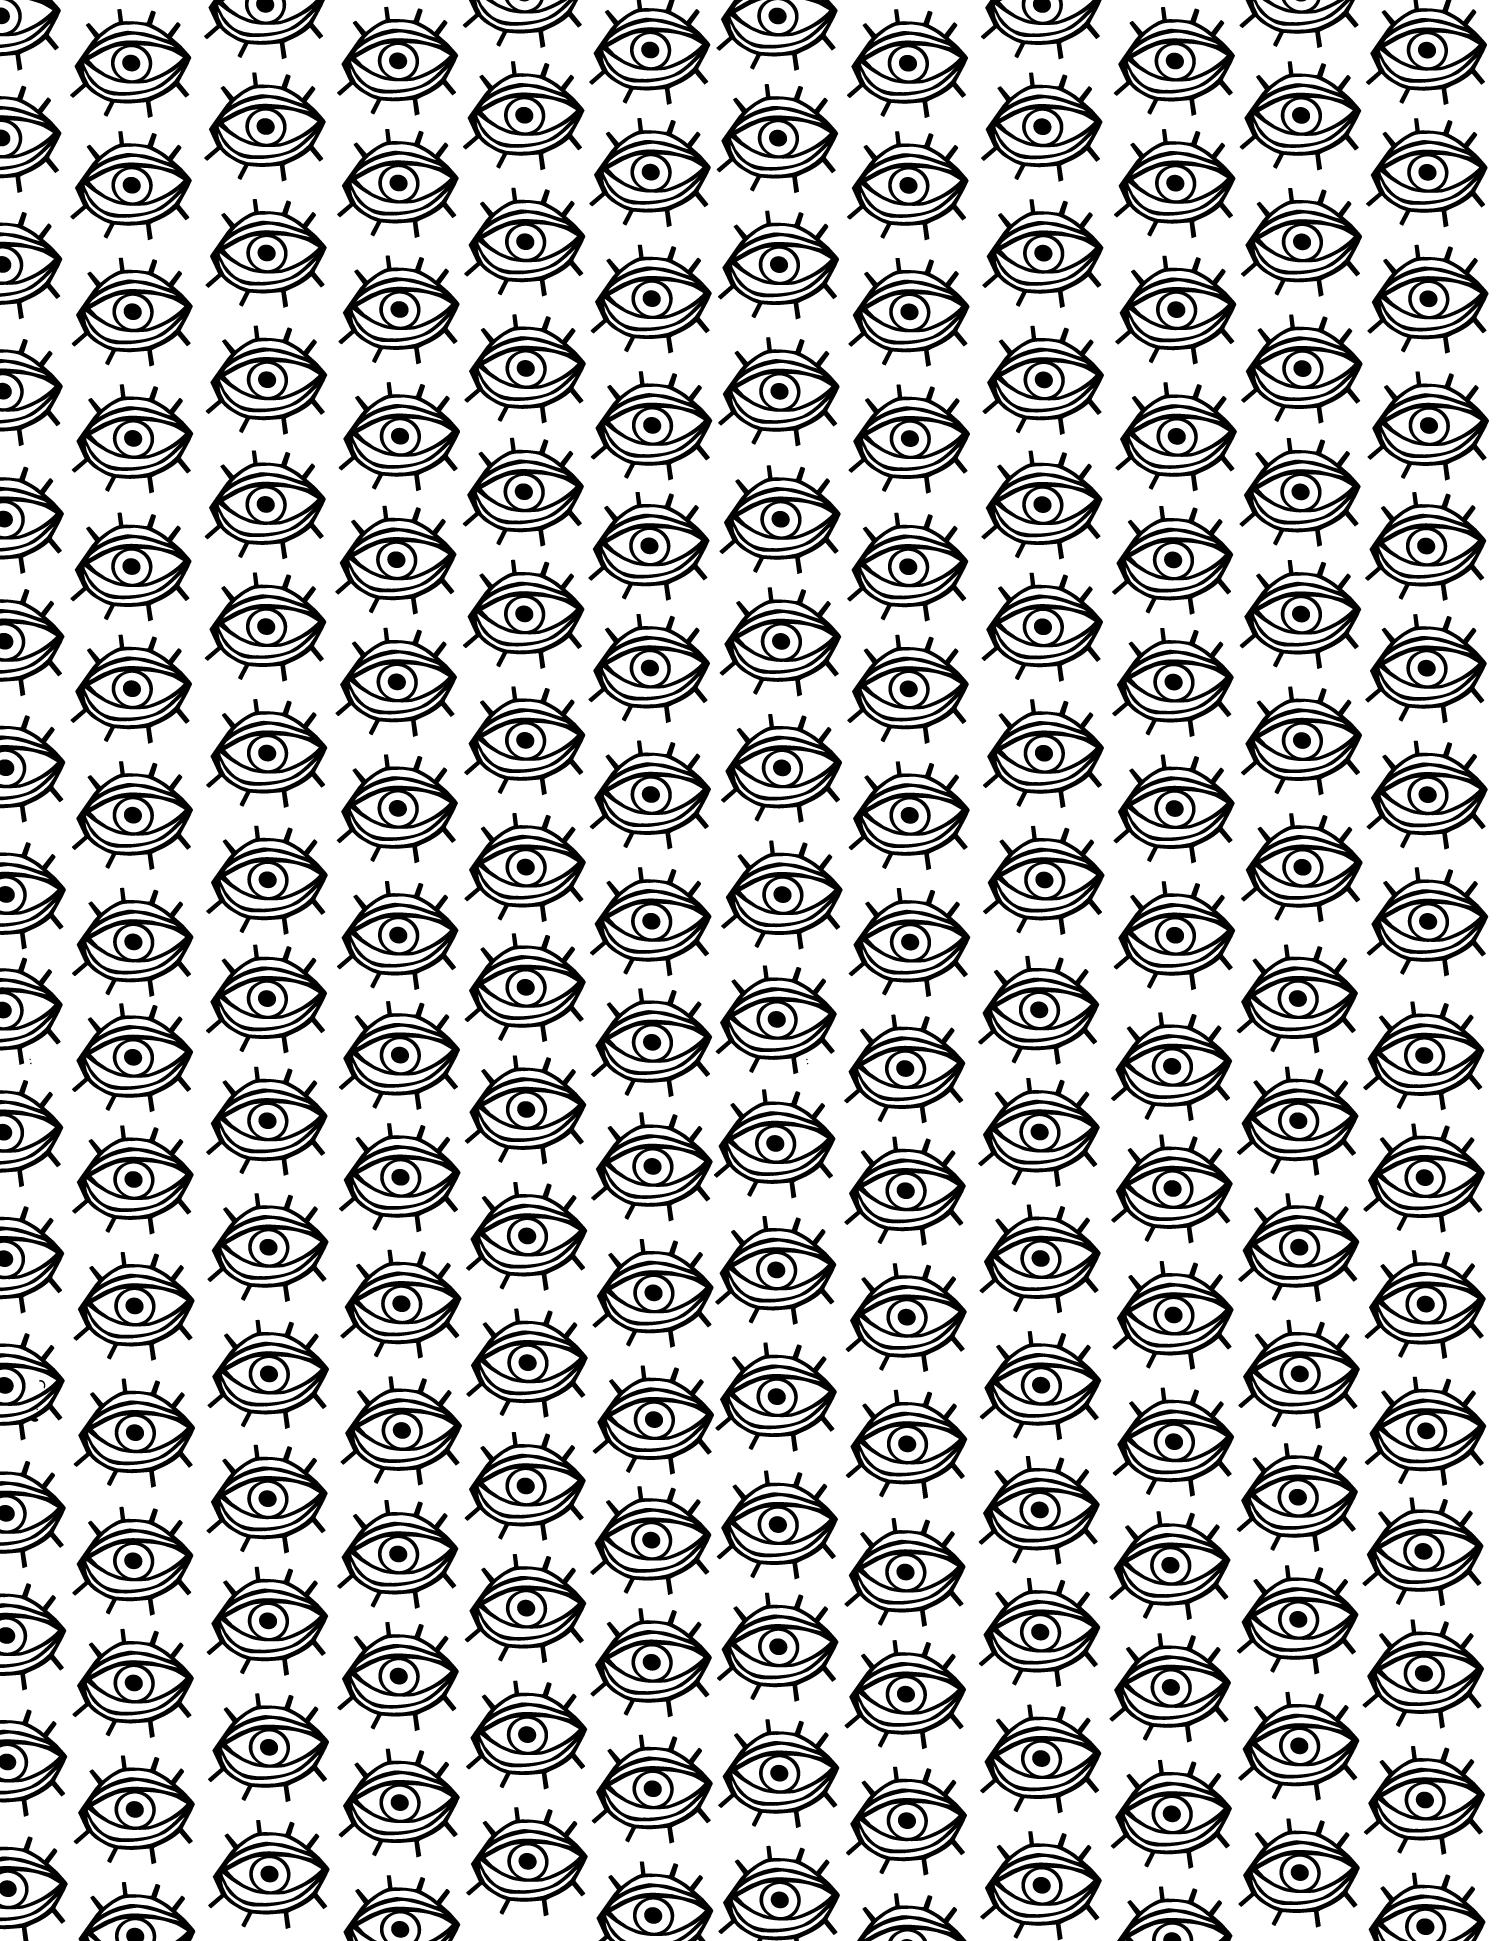 pattern22.jpg